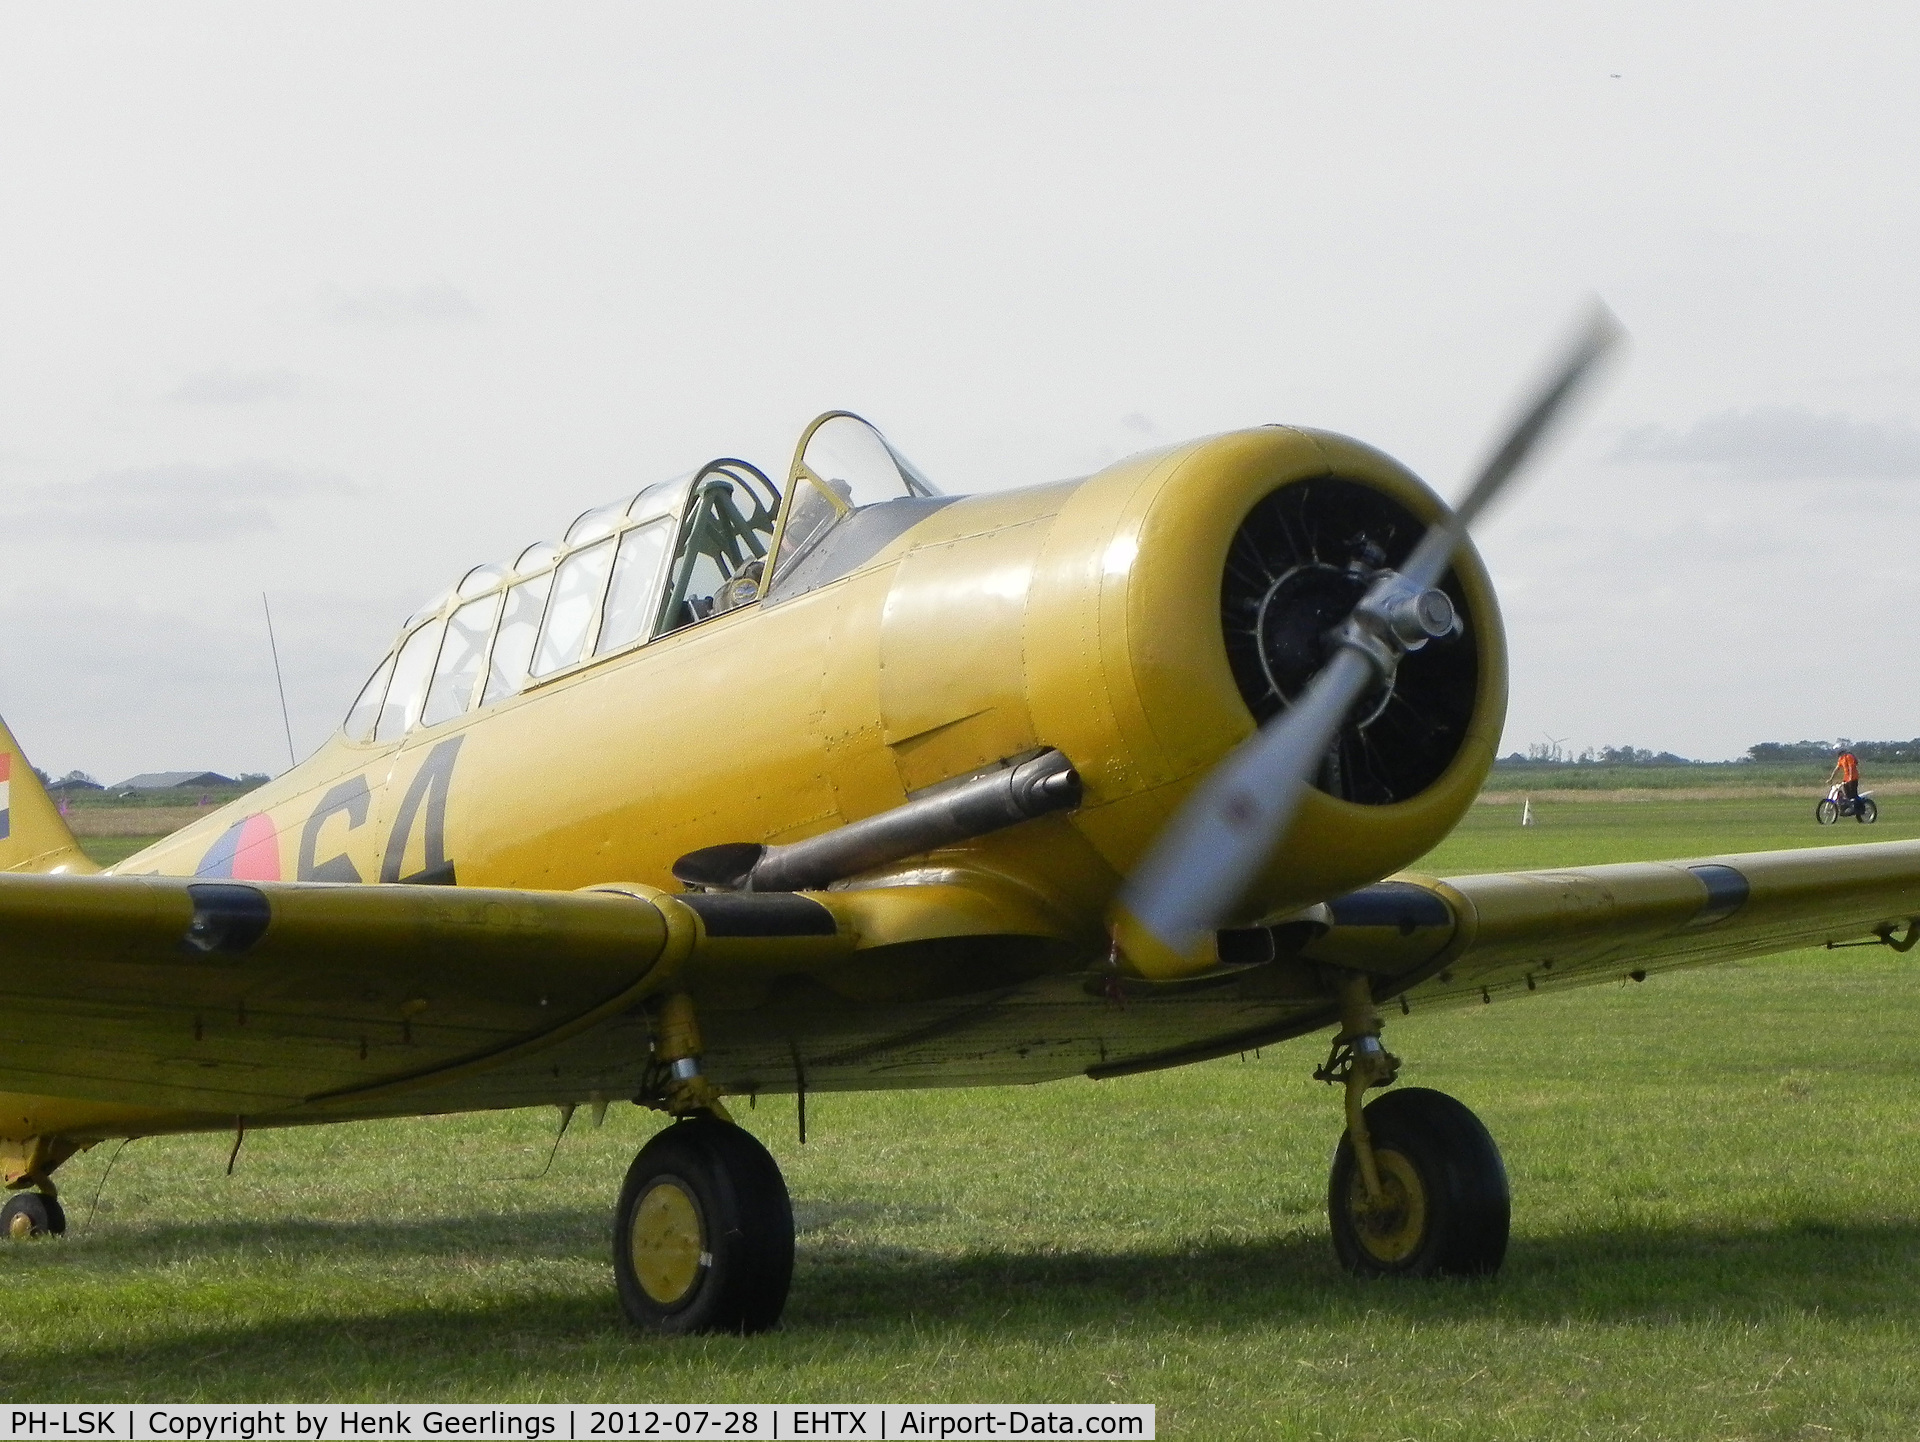 PH-LSK, 1942 Noorduyn AT-16 Harvard IIB C/N 14-641, Texel Air Show